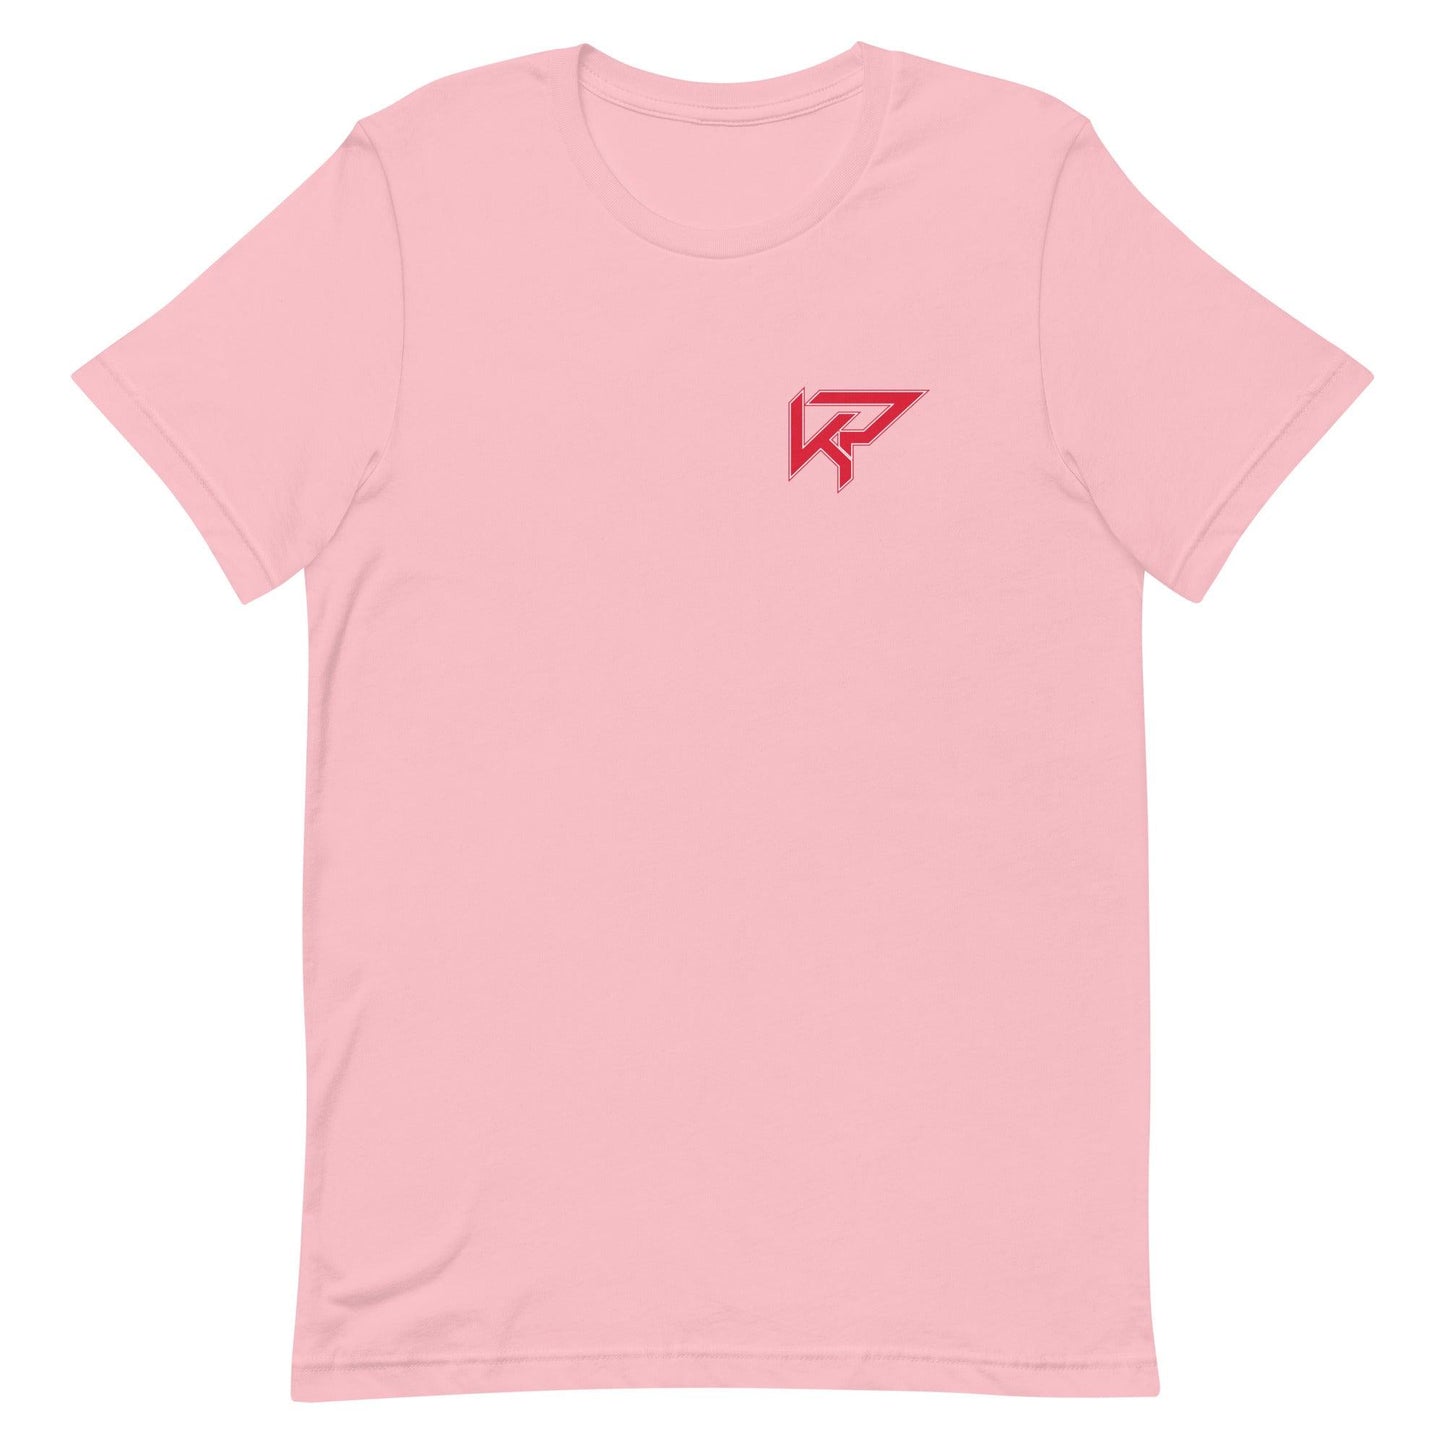 Kyle Perry "Elite" t-shirt - Fan Arch